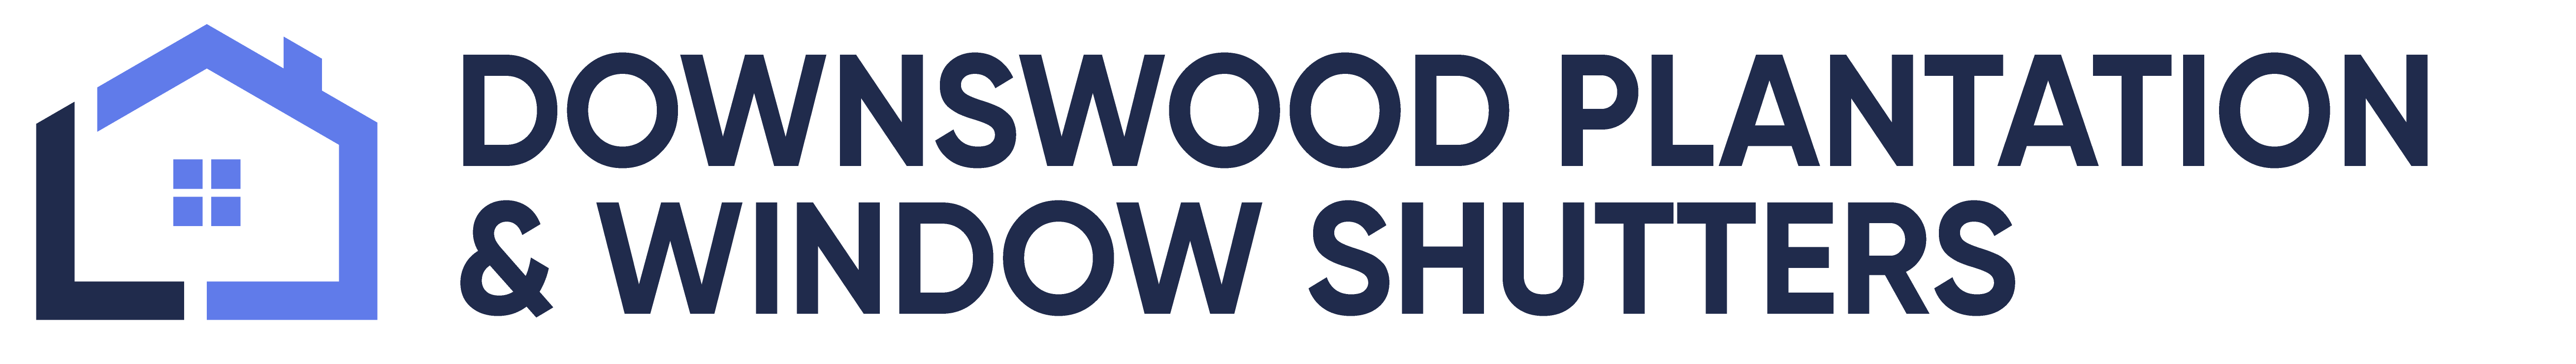 Downswood Plantation & Window Shutters